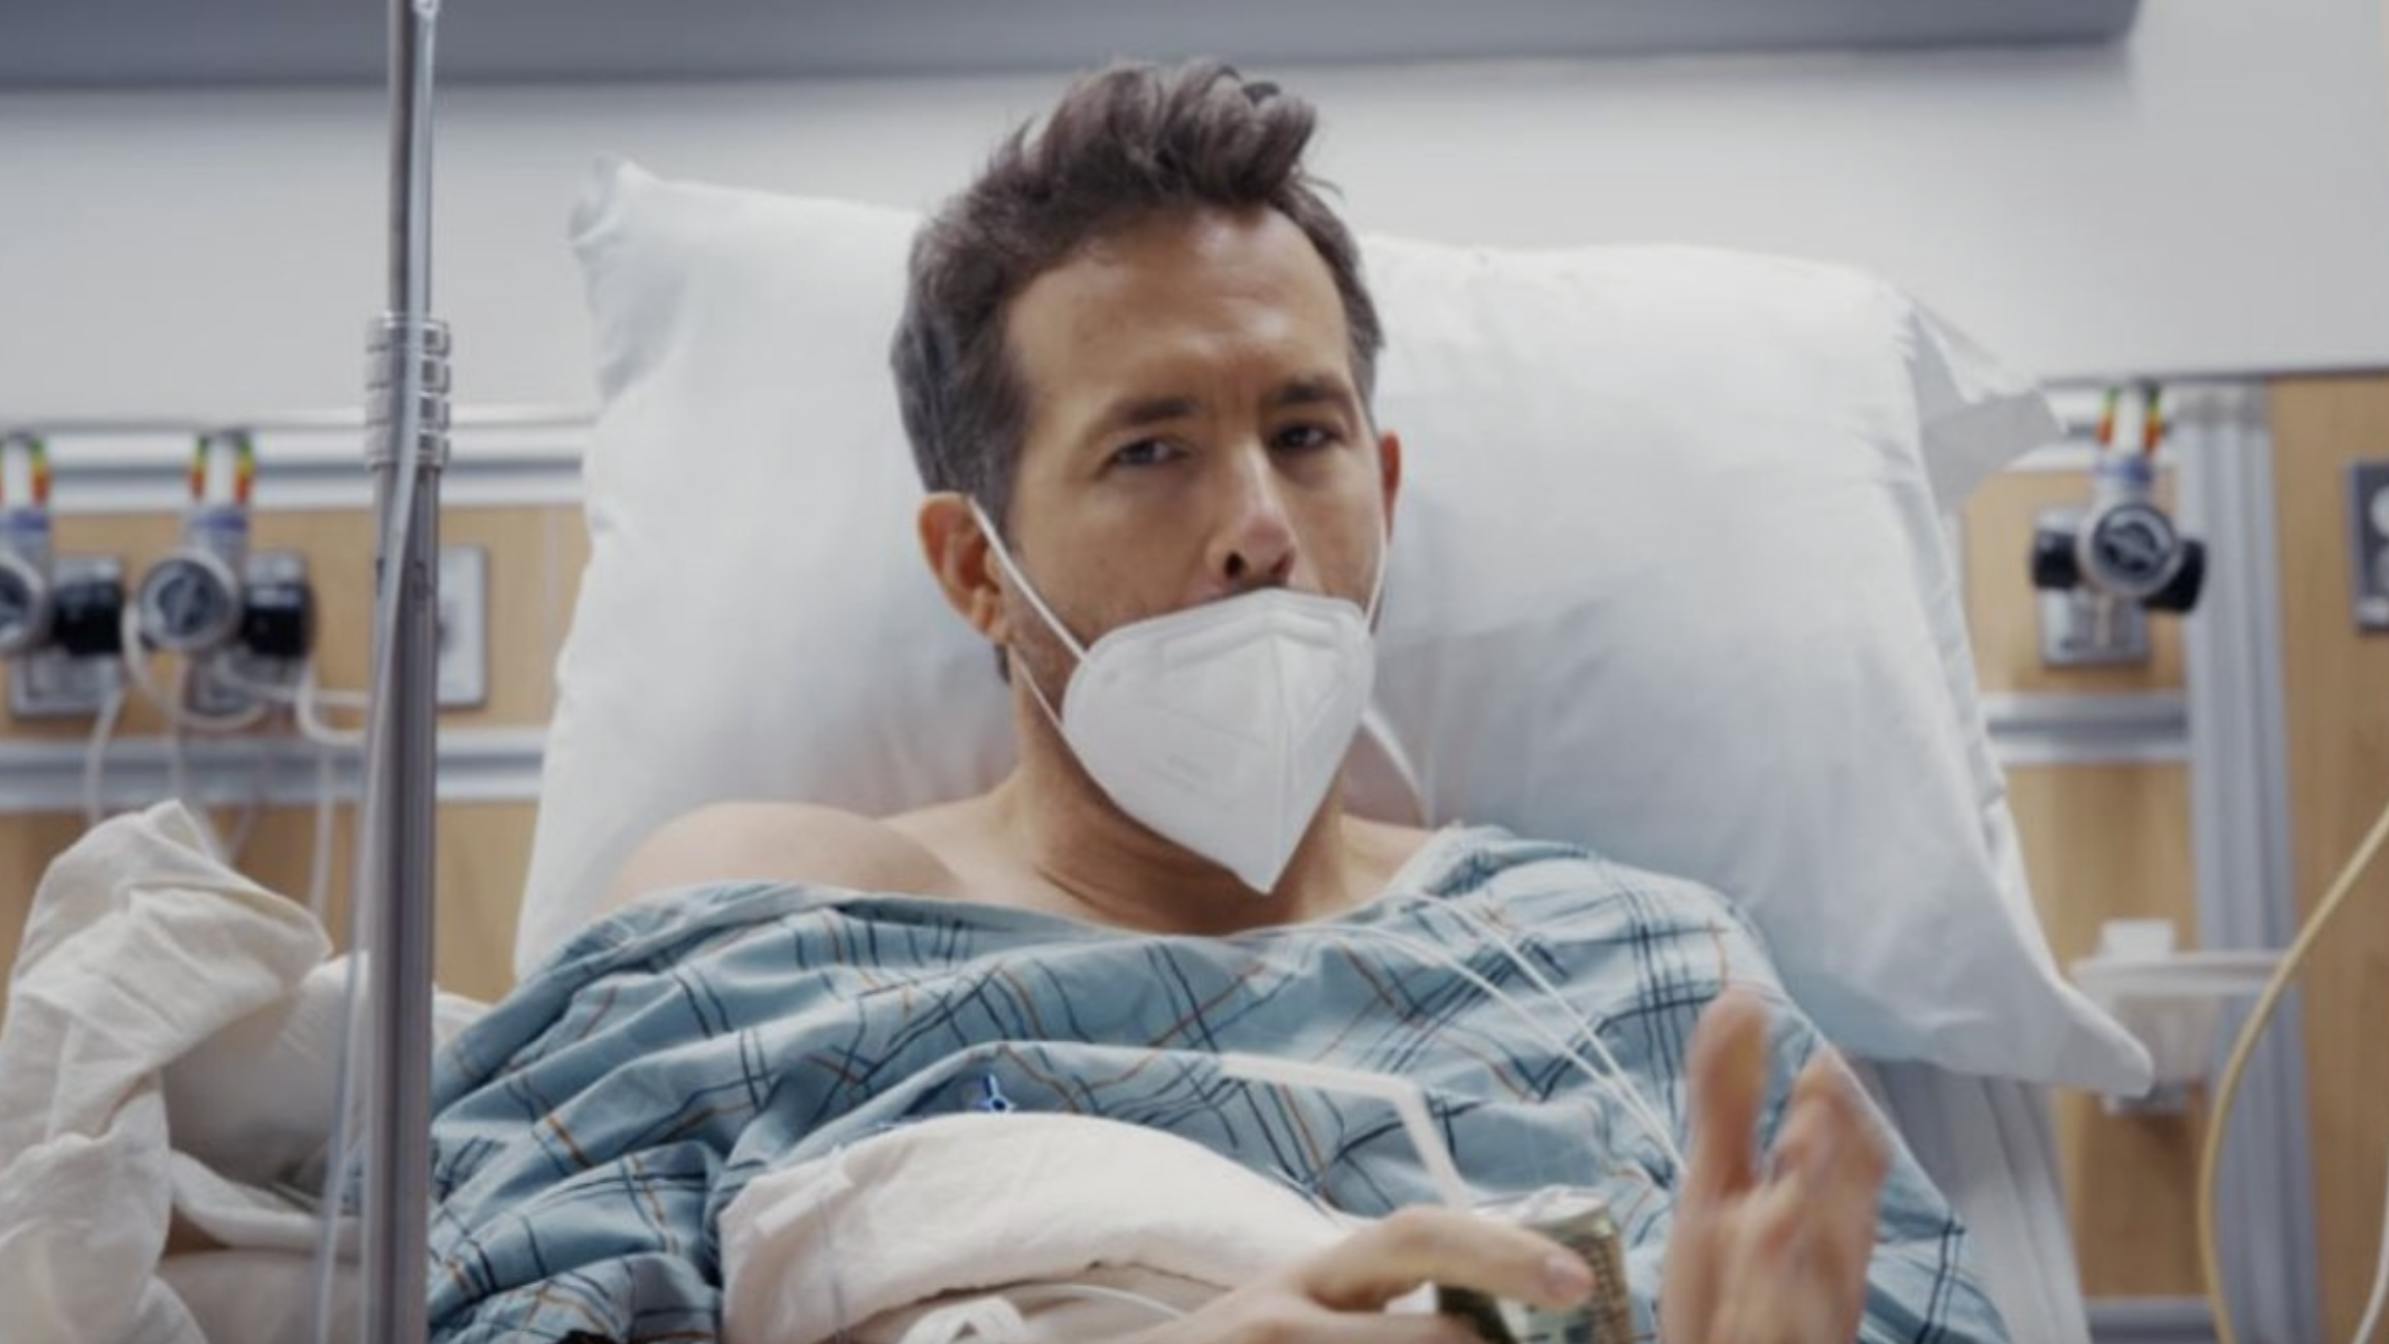 Skuespiller Ryan Reynolds har fået en "potentielt livreddende" operation.